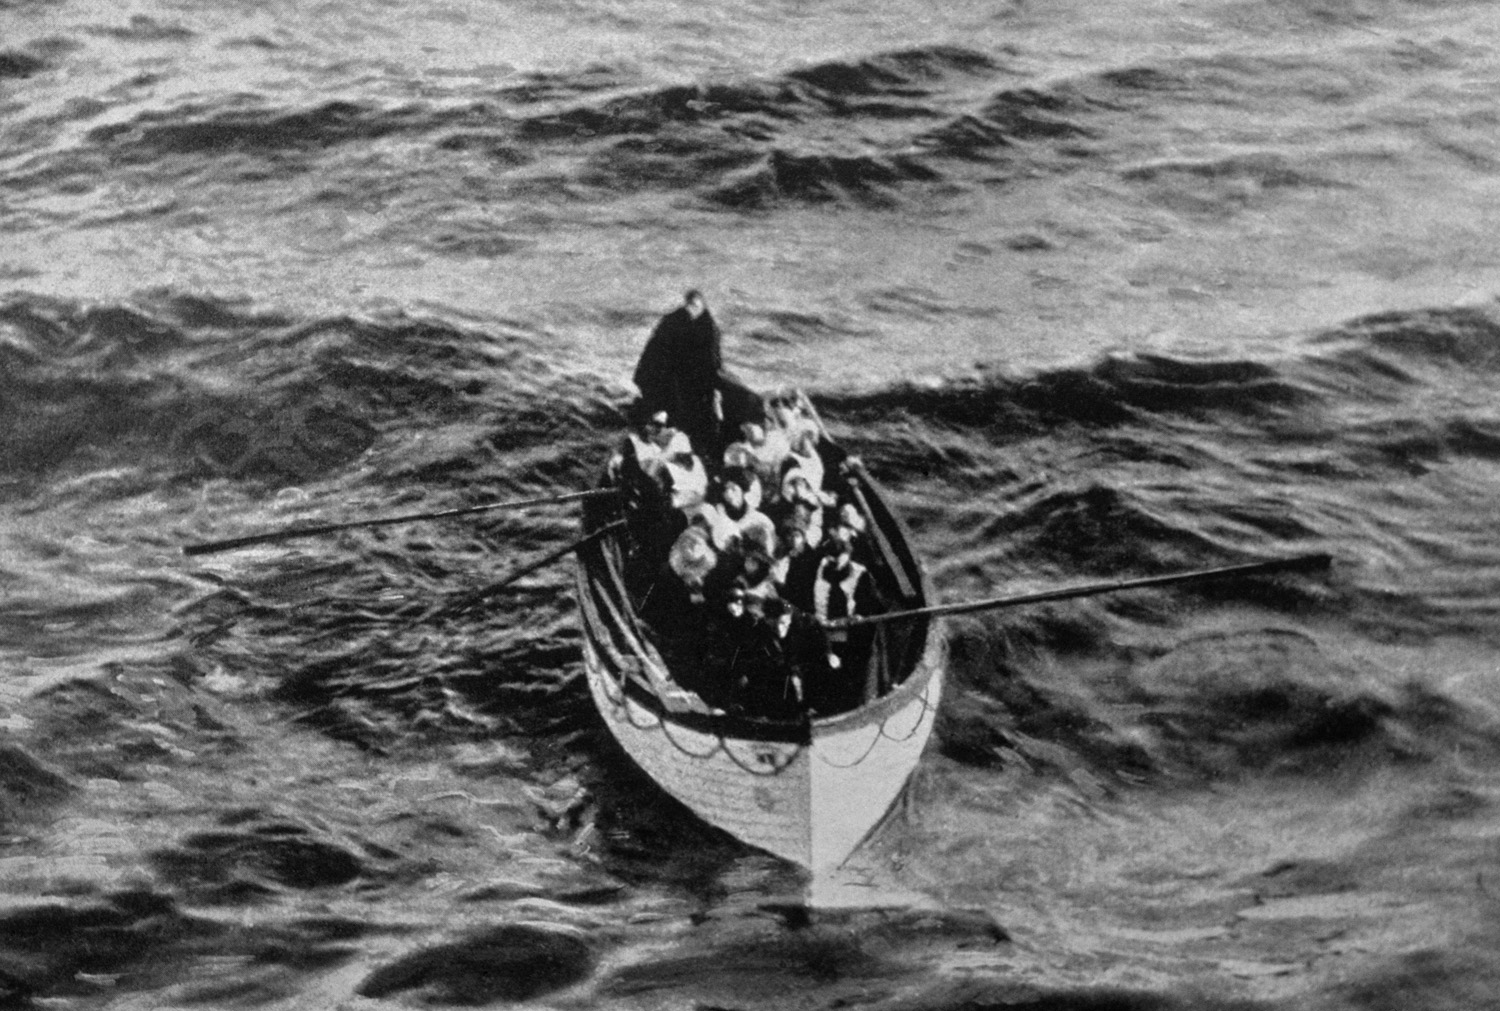 Titanic survivors approaching the Carpathia, 1912